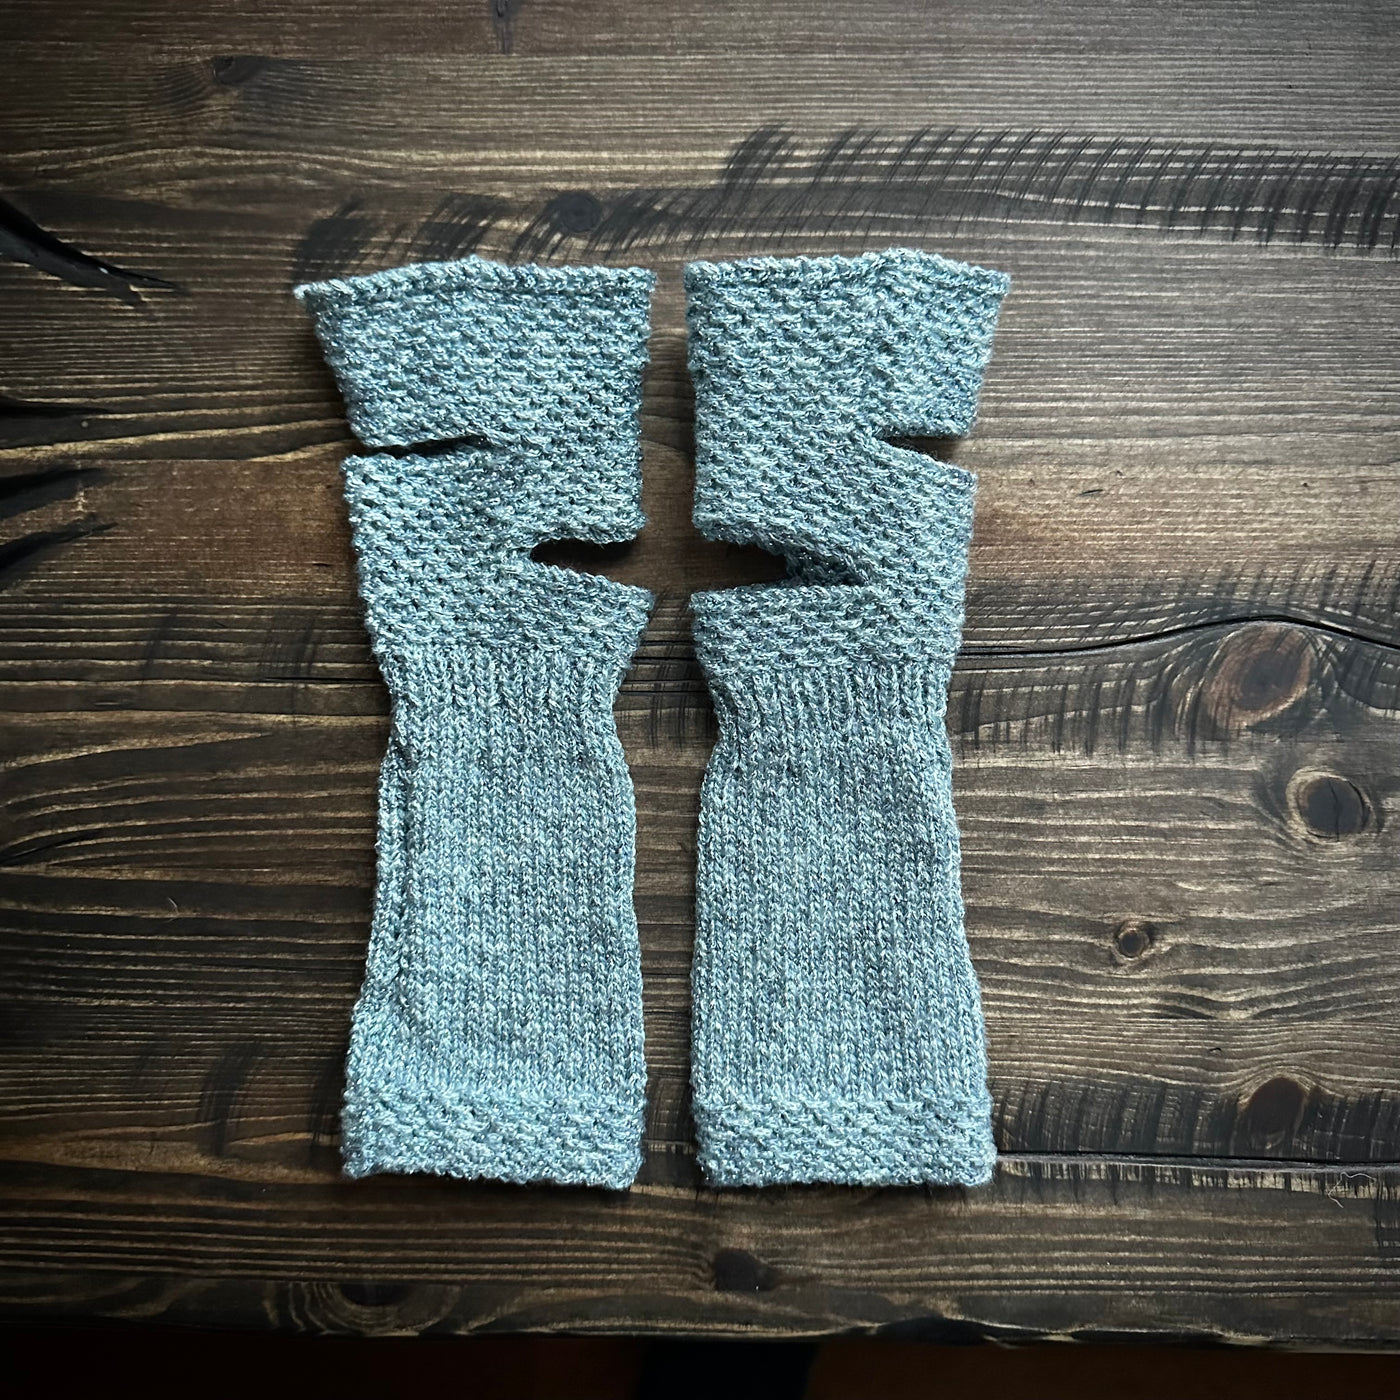 Handmade knitted sparkling blue wrist warmers